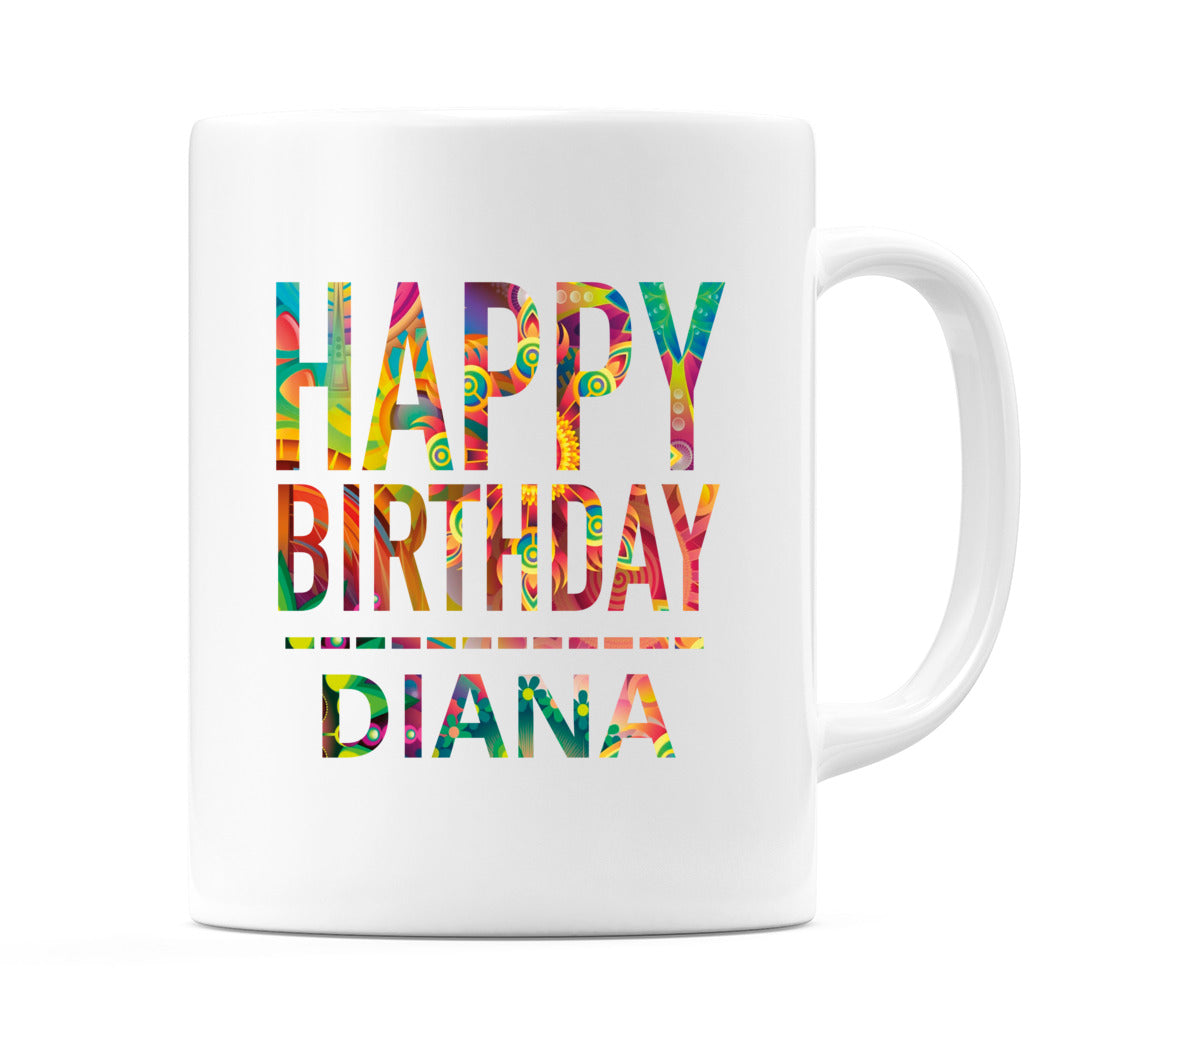 Happy Birthday Diana (Tie Dye Effect) Mug Cup by WeDoMugs